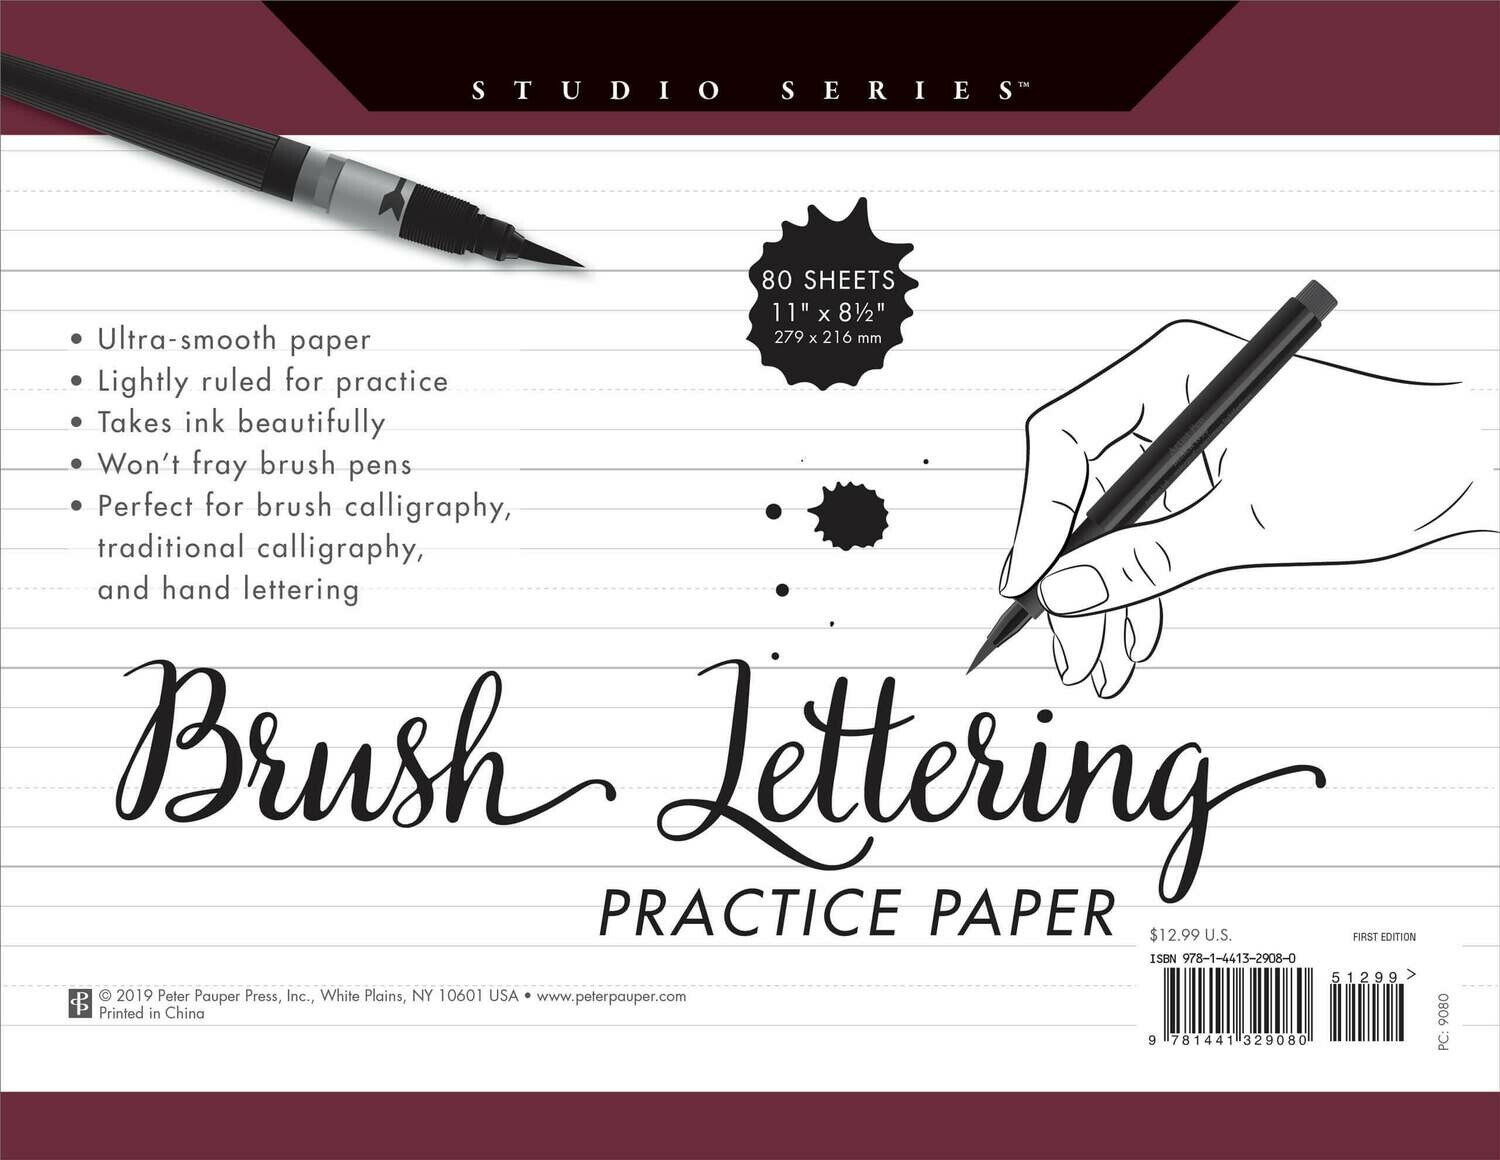 PPP Studio Series Brush Lettering Practice Paper